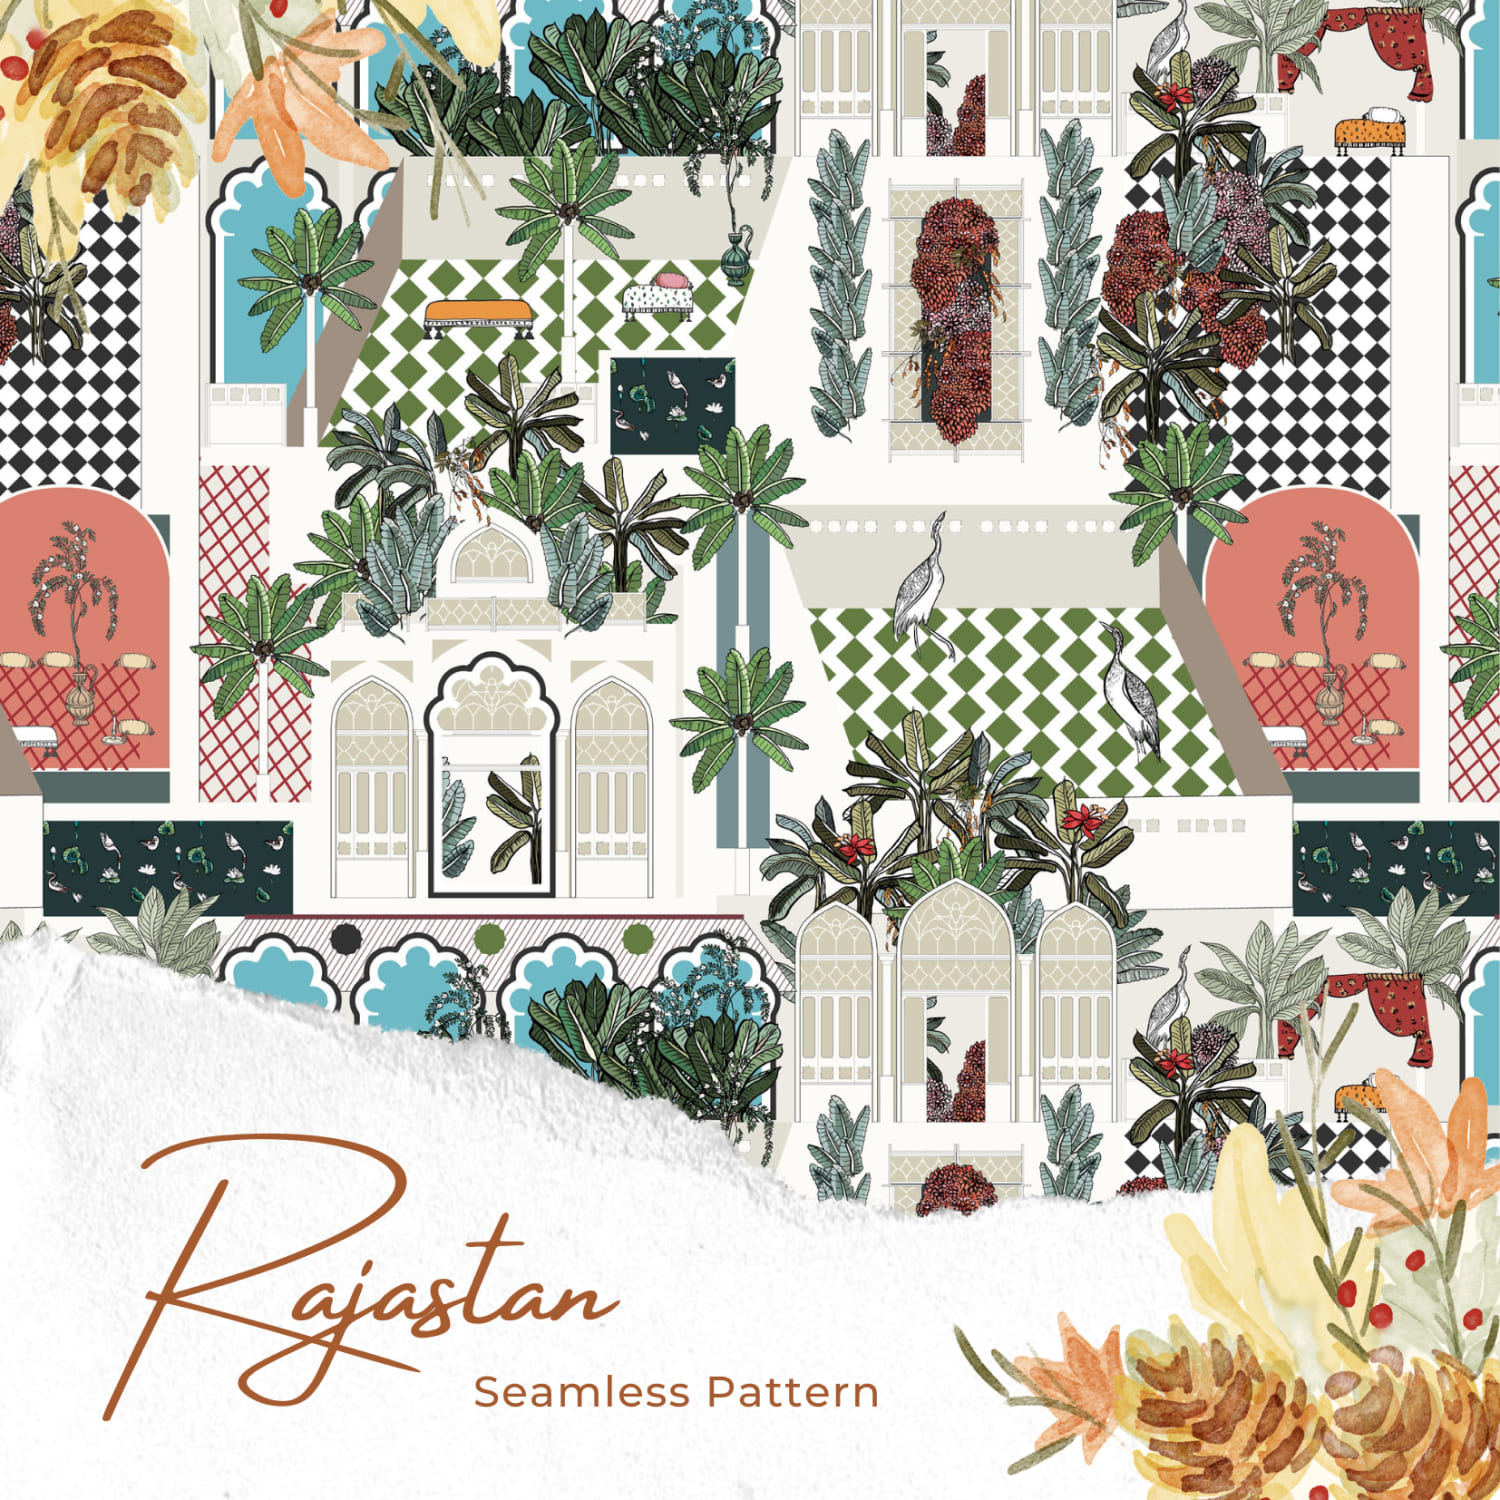 Prints of rajastan seamless pattern.